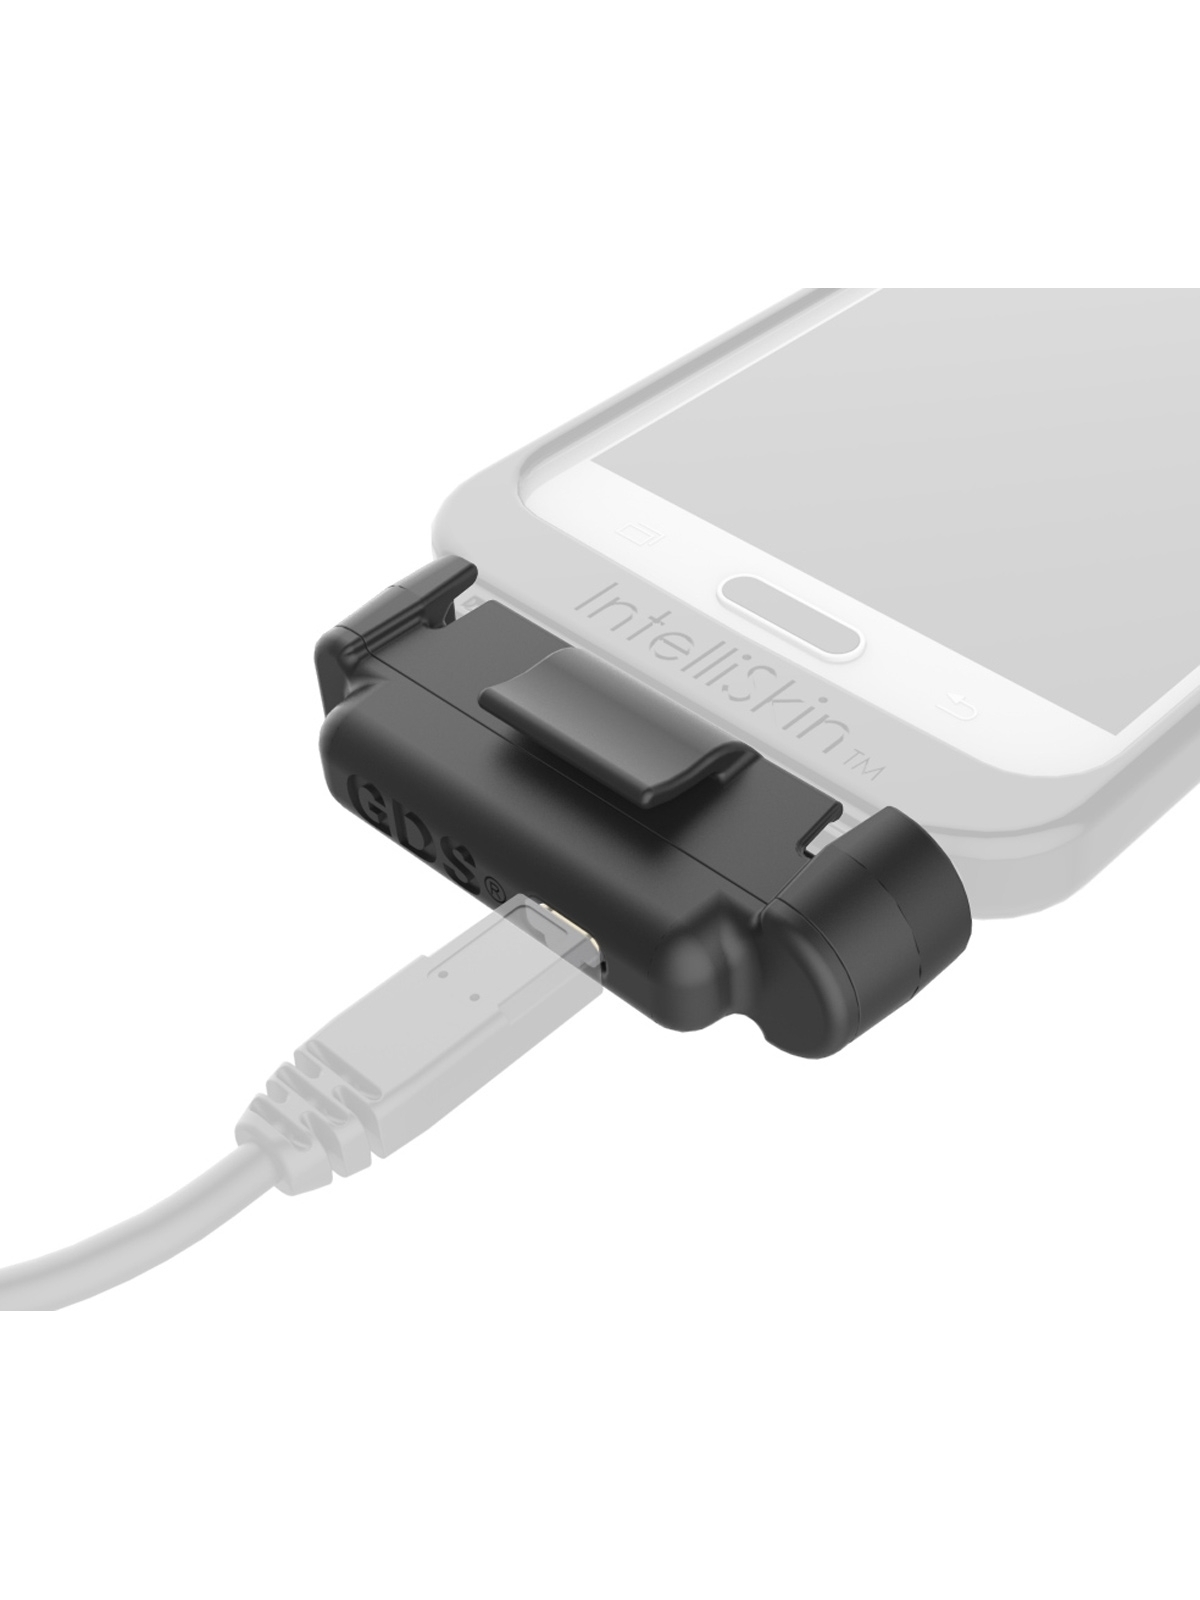 RAM Mounts Snap-Con GDS-Ladesockel - für Smartphones mit IntelliSkin-Lade-/Schutzhülle, microUSB-Anschluss, im Polybeutel